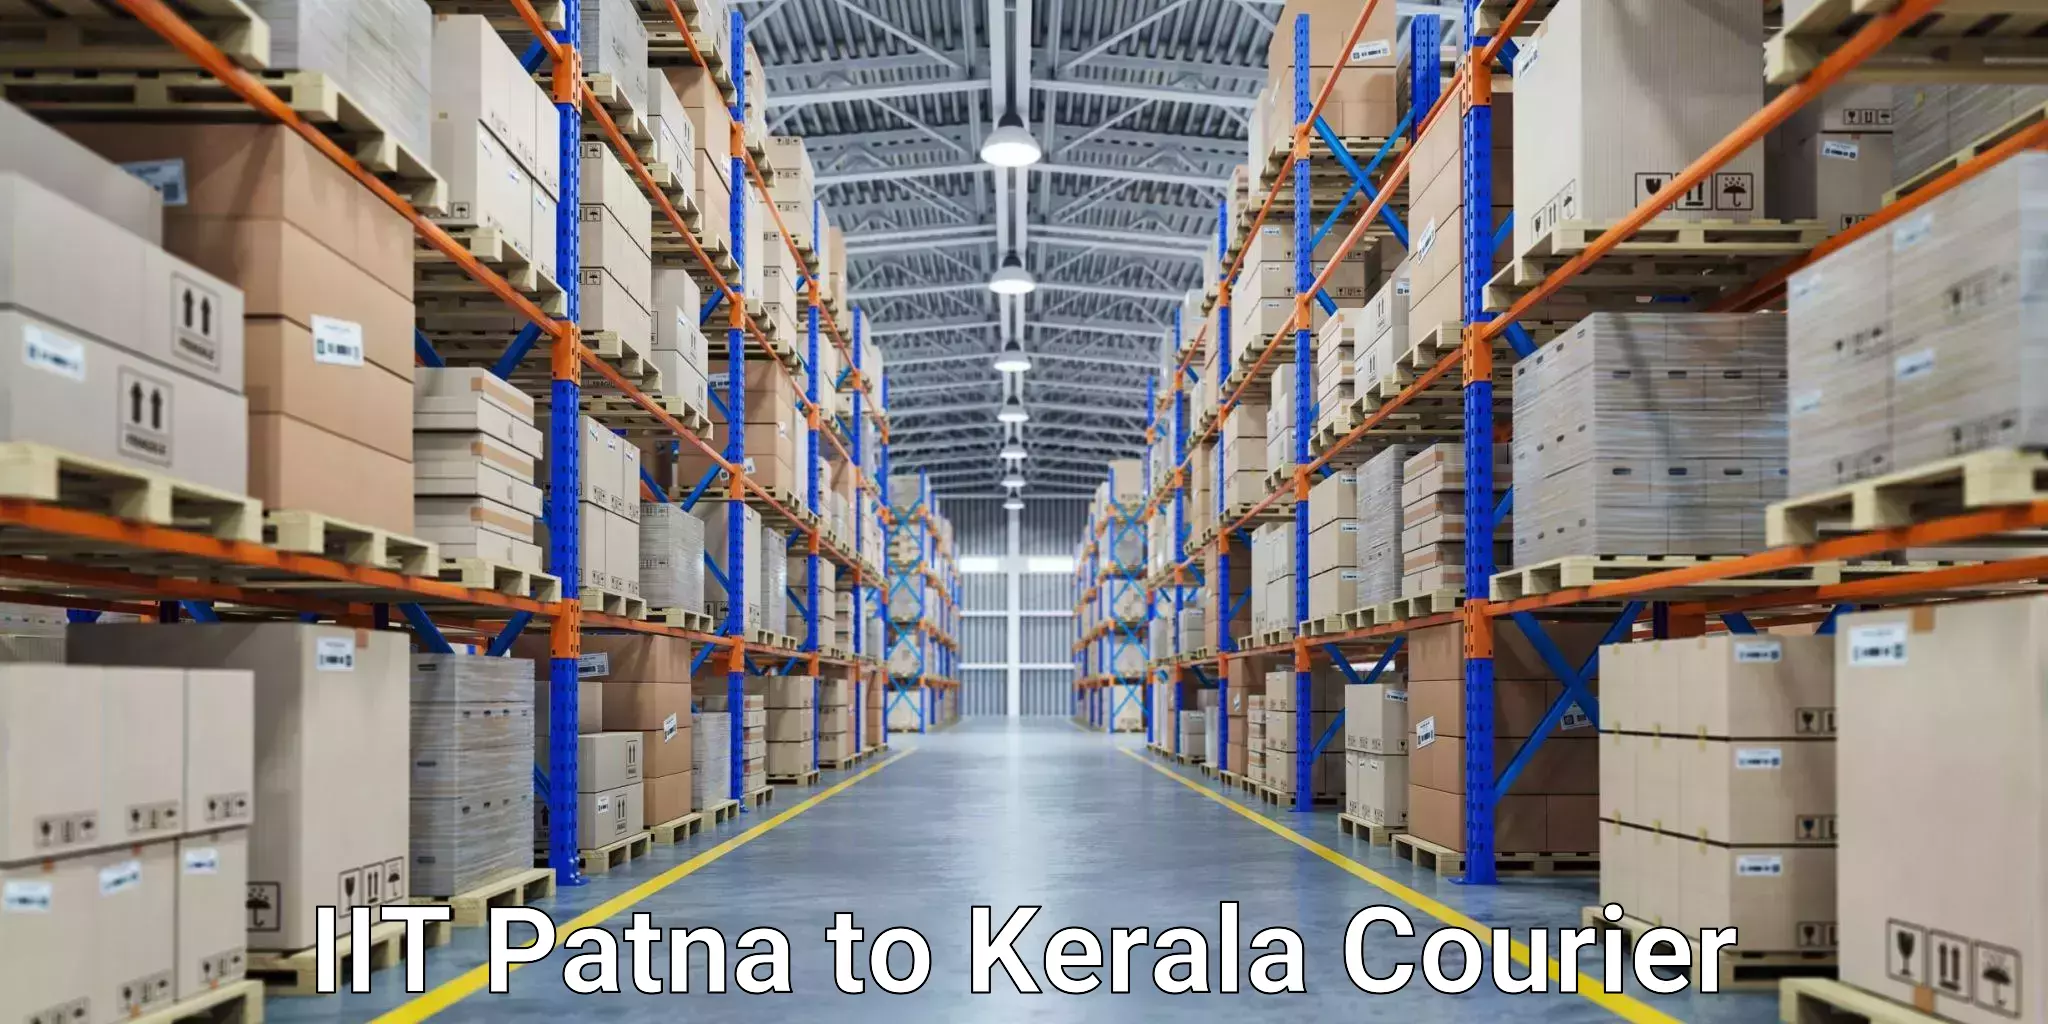 Courier service comparison IIT Patna to Kerala